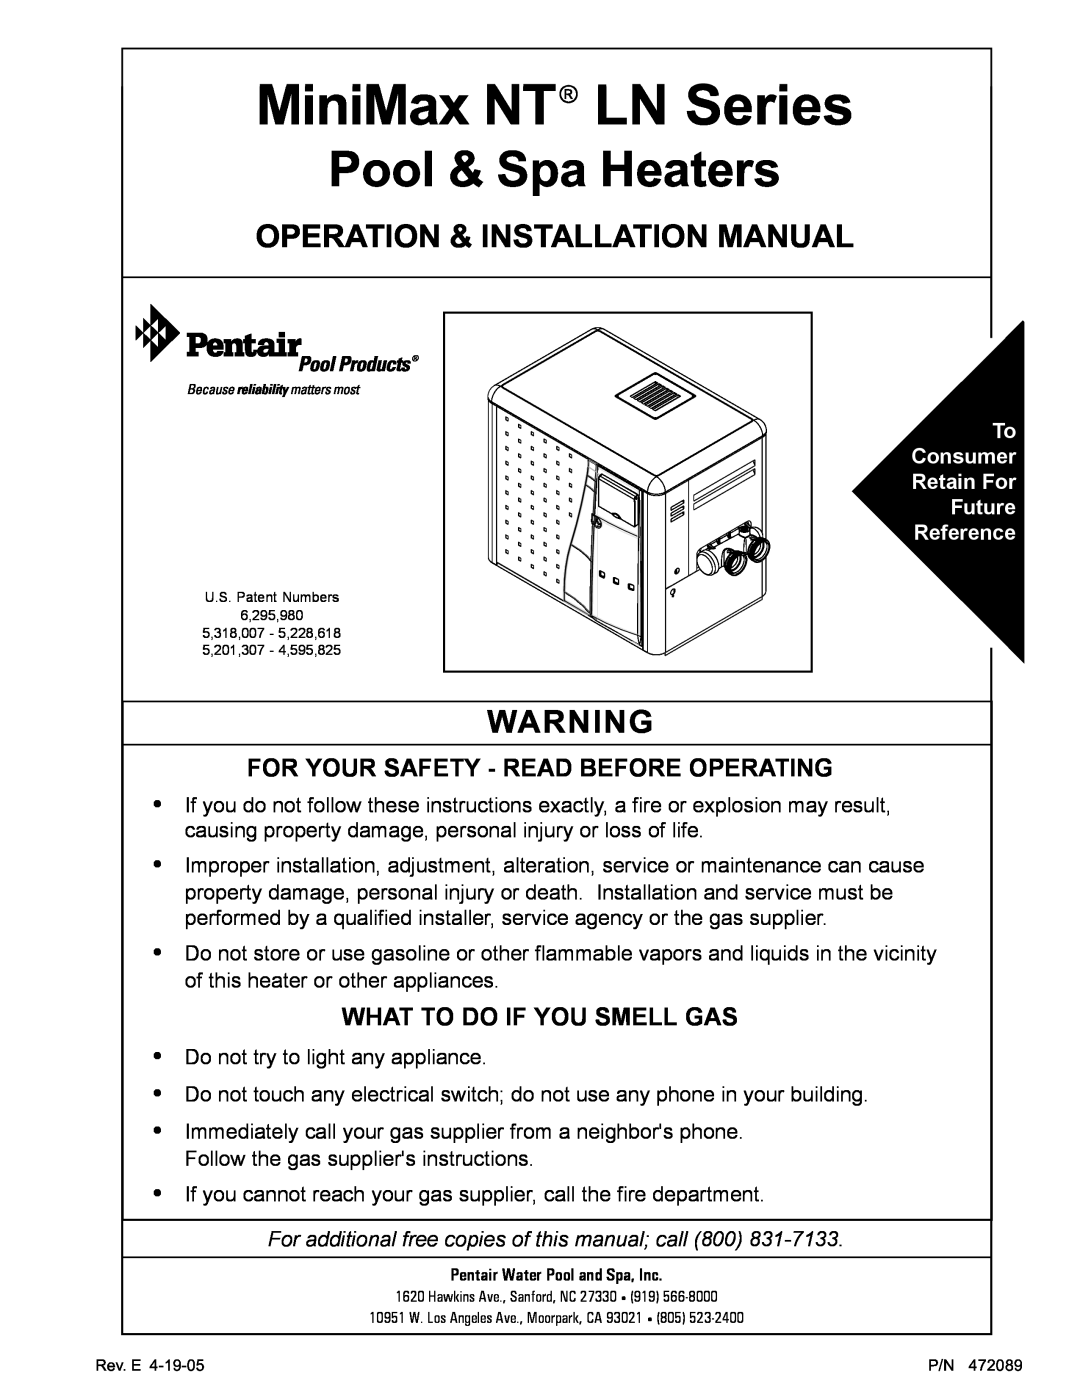 Pentair MiniMax NT LN installation manual Operation & Installation Manual, For Your Safety - Read Before Operating 